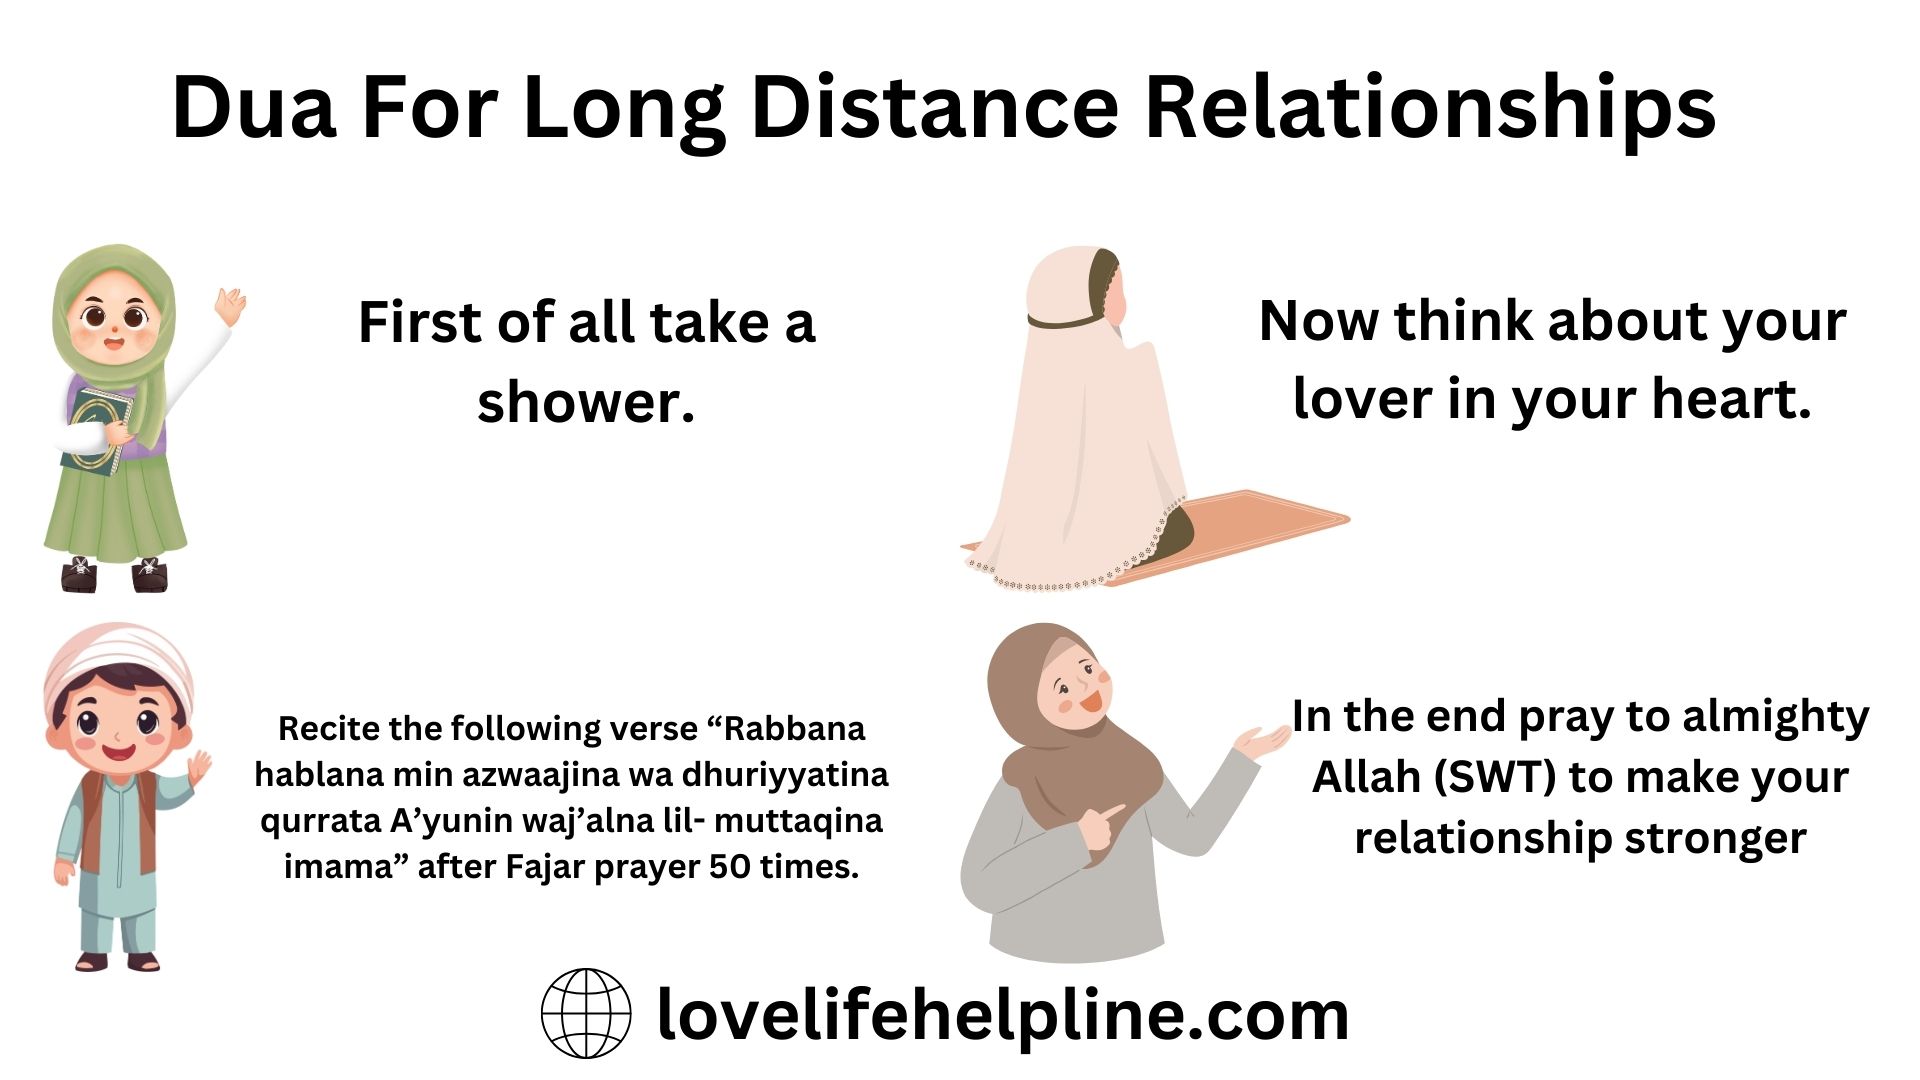 Dua for long distance relationships